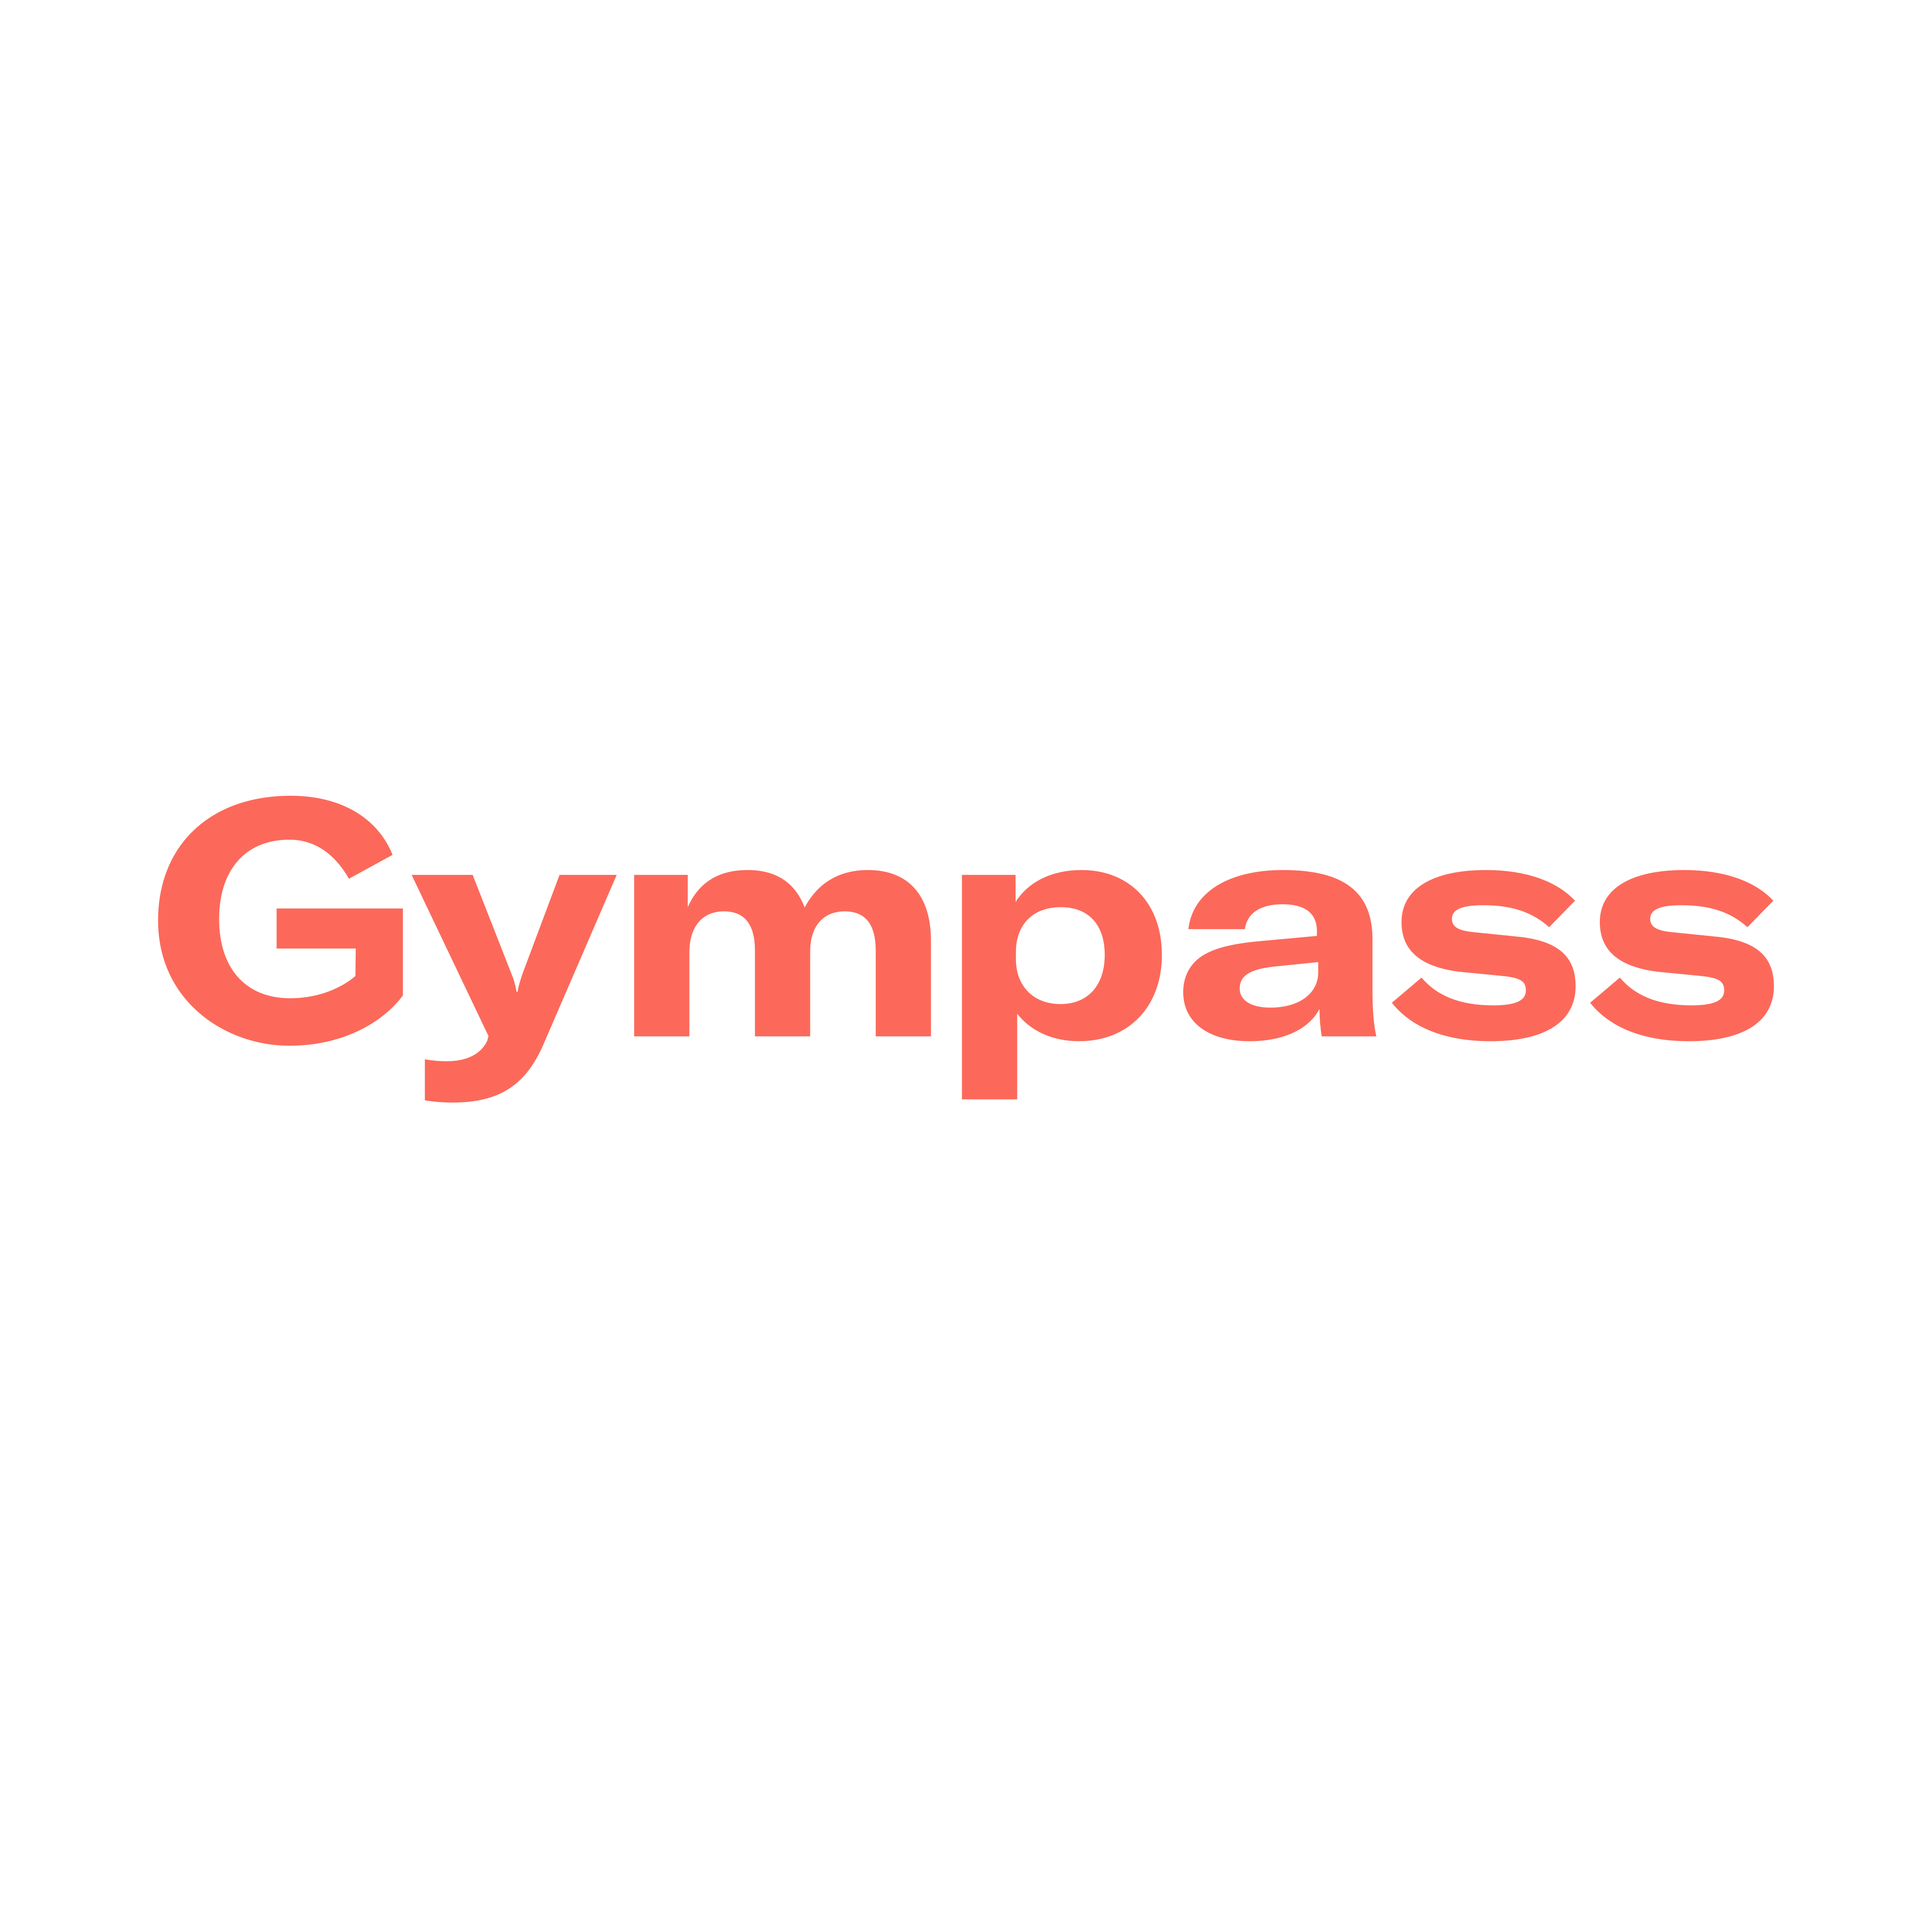 gympass logo.